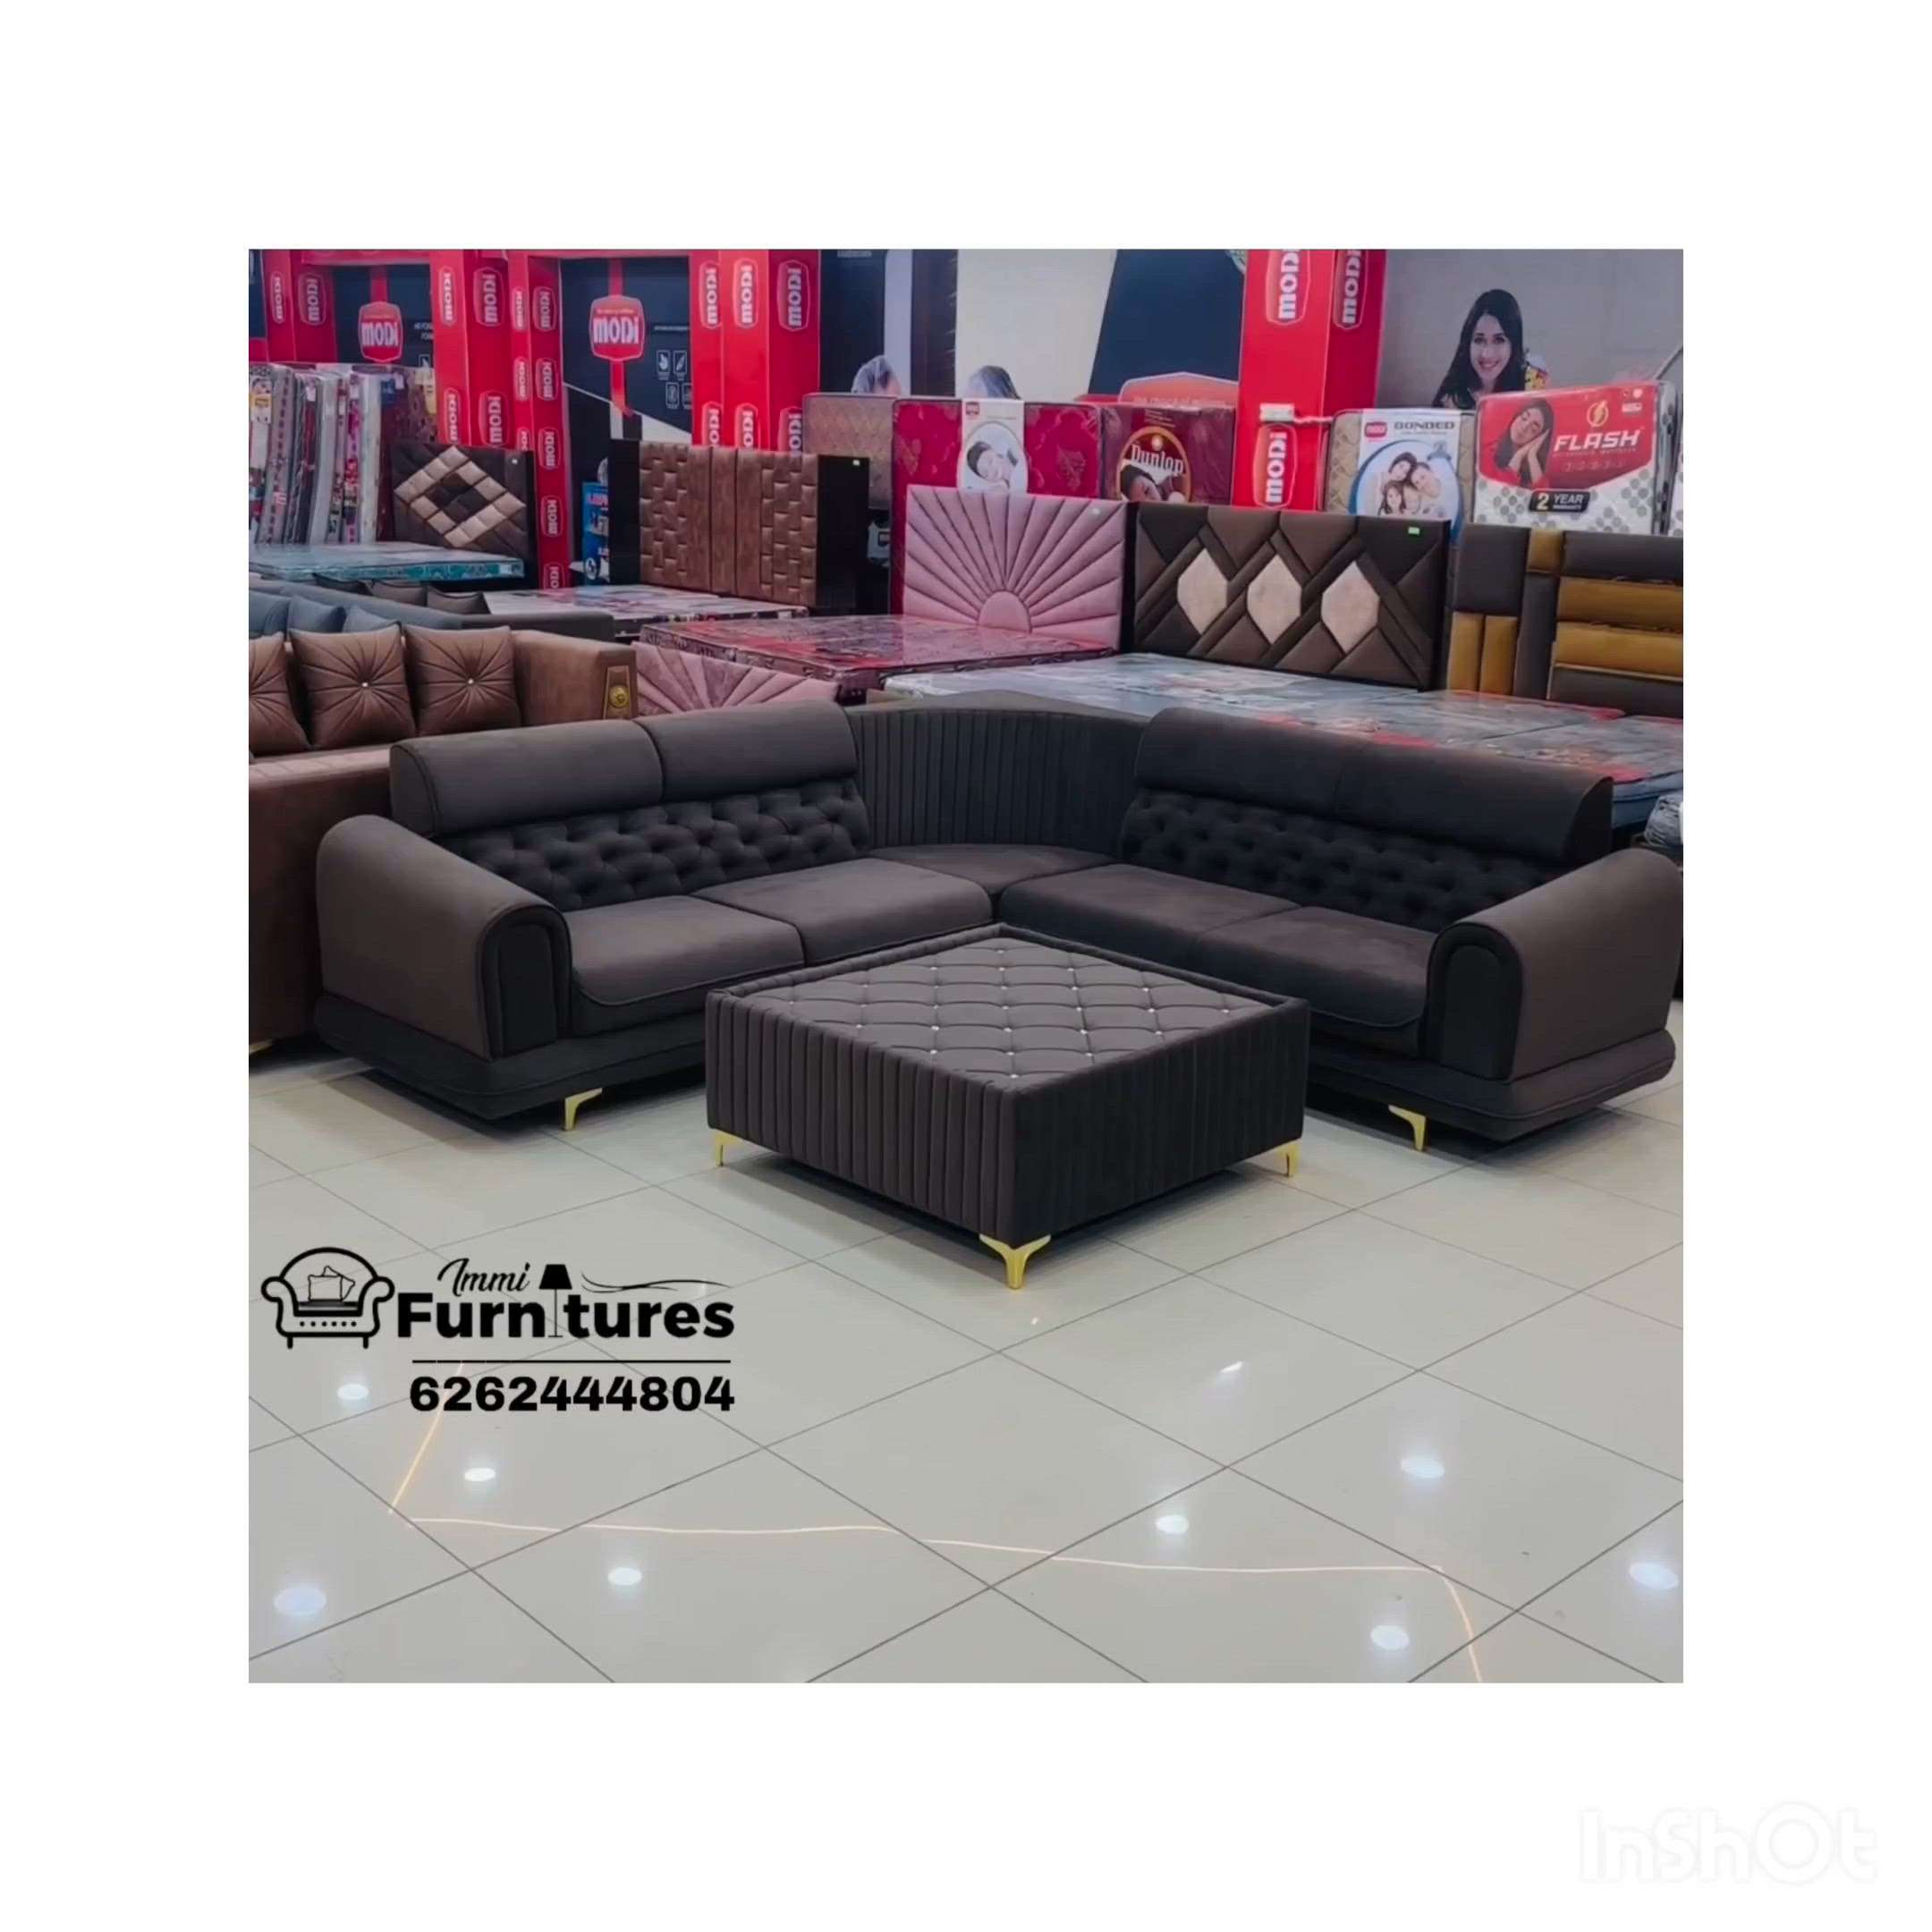 modern sofa luxury sofa  #sofaset  #LivingRoomSofa  #furnitures  #InteriorDesigner  #koło  #LUXURY_INTERIOR  #immifurniture  #viral  #tranding  #indorehouse  #Indore  #indorefurniture